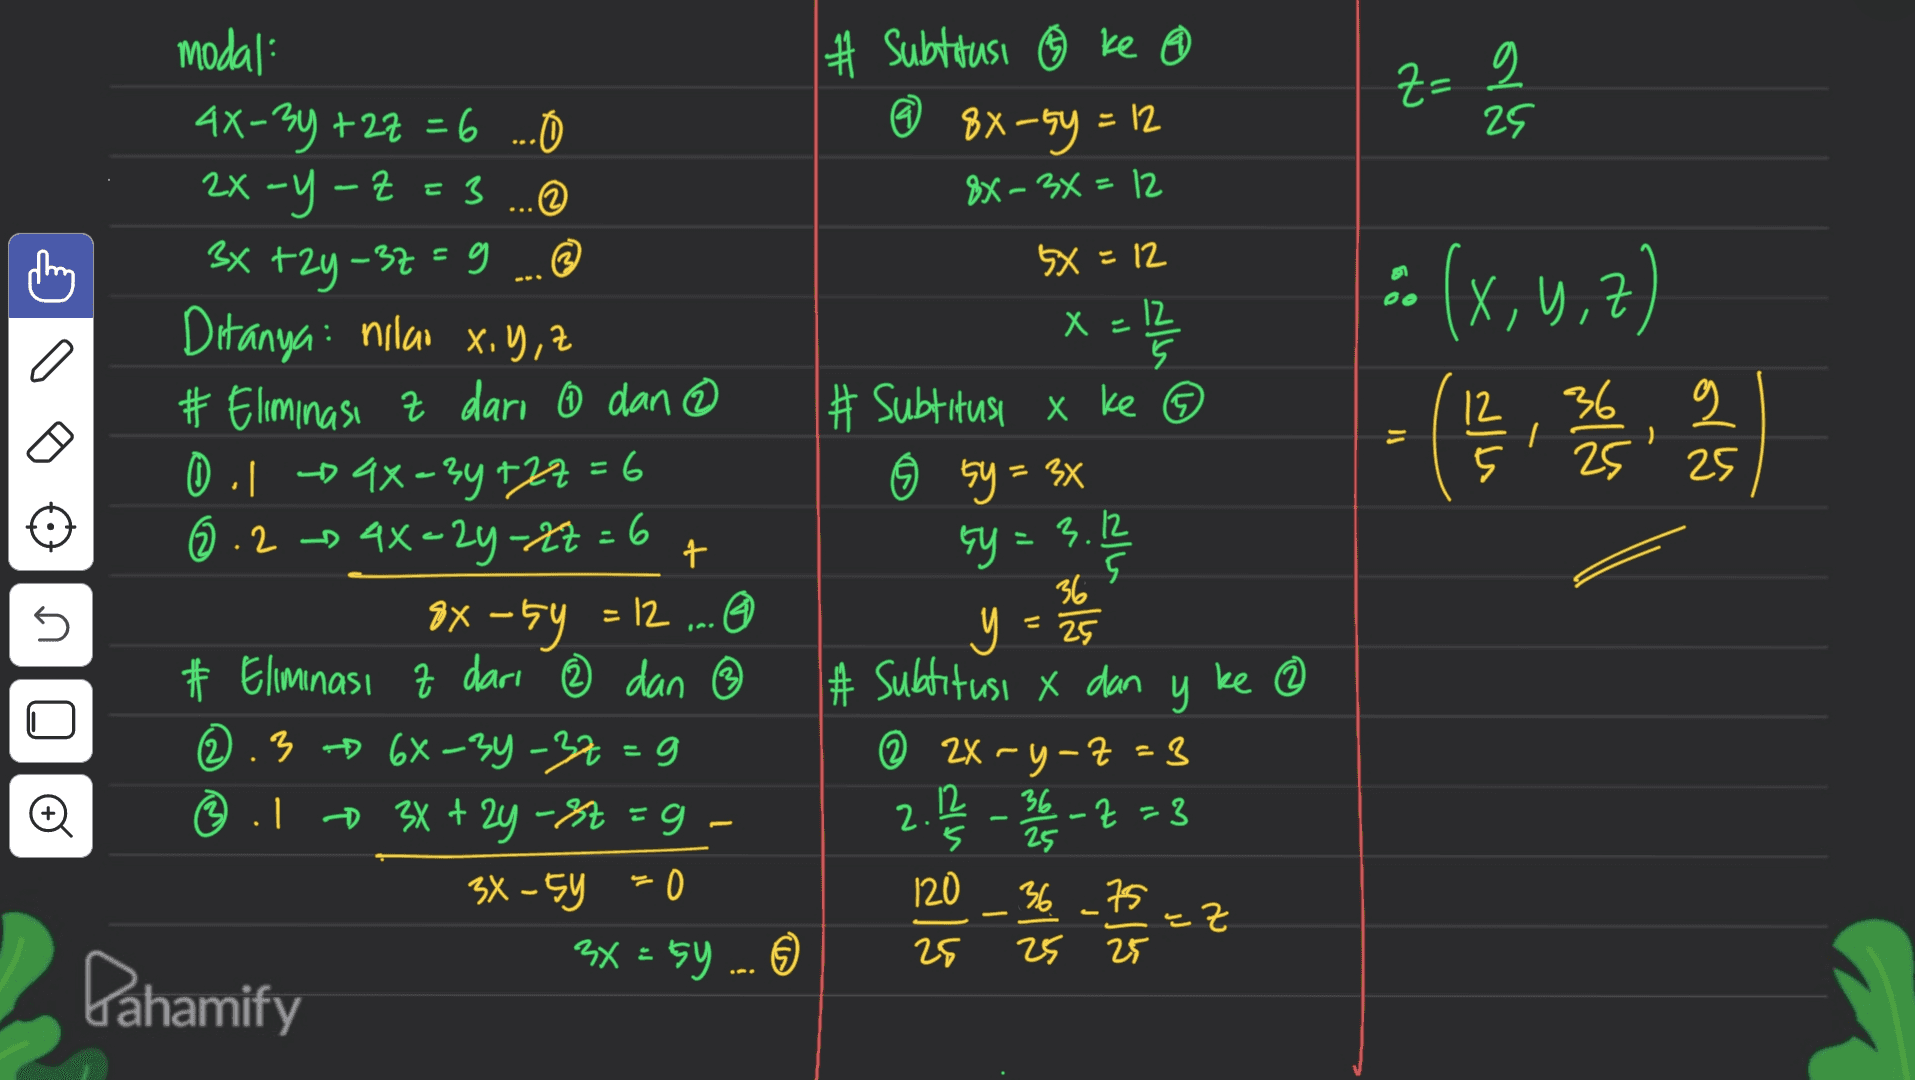 # Subtitusi ③ ke ® © 8x-5y = 12 = EX-3X=12 z= 2 Z- 2 25 79 5x = 12 C X = 12 5 -- (x,4,7) - ( 12 # Subtitusi x ke Ô sy I modal 4X-3y + 2z =6 .... 2x -Y-Z = 3 ... 3x +2y –37 = 9 ....@ += Ditanya nilao x,y,z # Eliminasi z dari 6 dan @ 0.1 - 4x +34 727 = 6 ©.2 4x -24 -27 = 6 0 # Eliminasi z dari ® dan ③ © - @ .3 6X-34-32=9 © .1 + 3x + 2y -St = 9 - - + =9 34-5y = 0 = 0 3x = 5 ... ☺ 36 g 25 25 = 3X 7 Ey = 3.12 n ях –ту. = .12 - 36 y = 25 # Subtitusi x dan у ke © 2X - Y-7 = 3 12 -Z - 3 5 120 36 근 25 25 25 2. יו - y必巧么仍 - sit Pahamify 